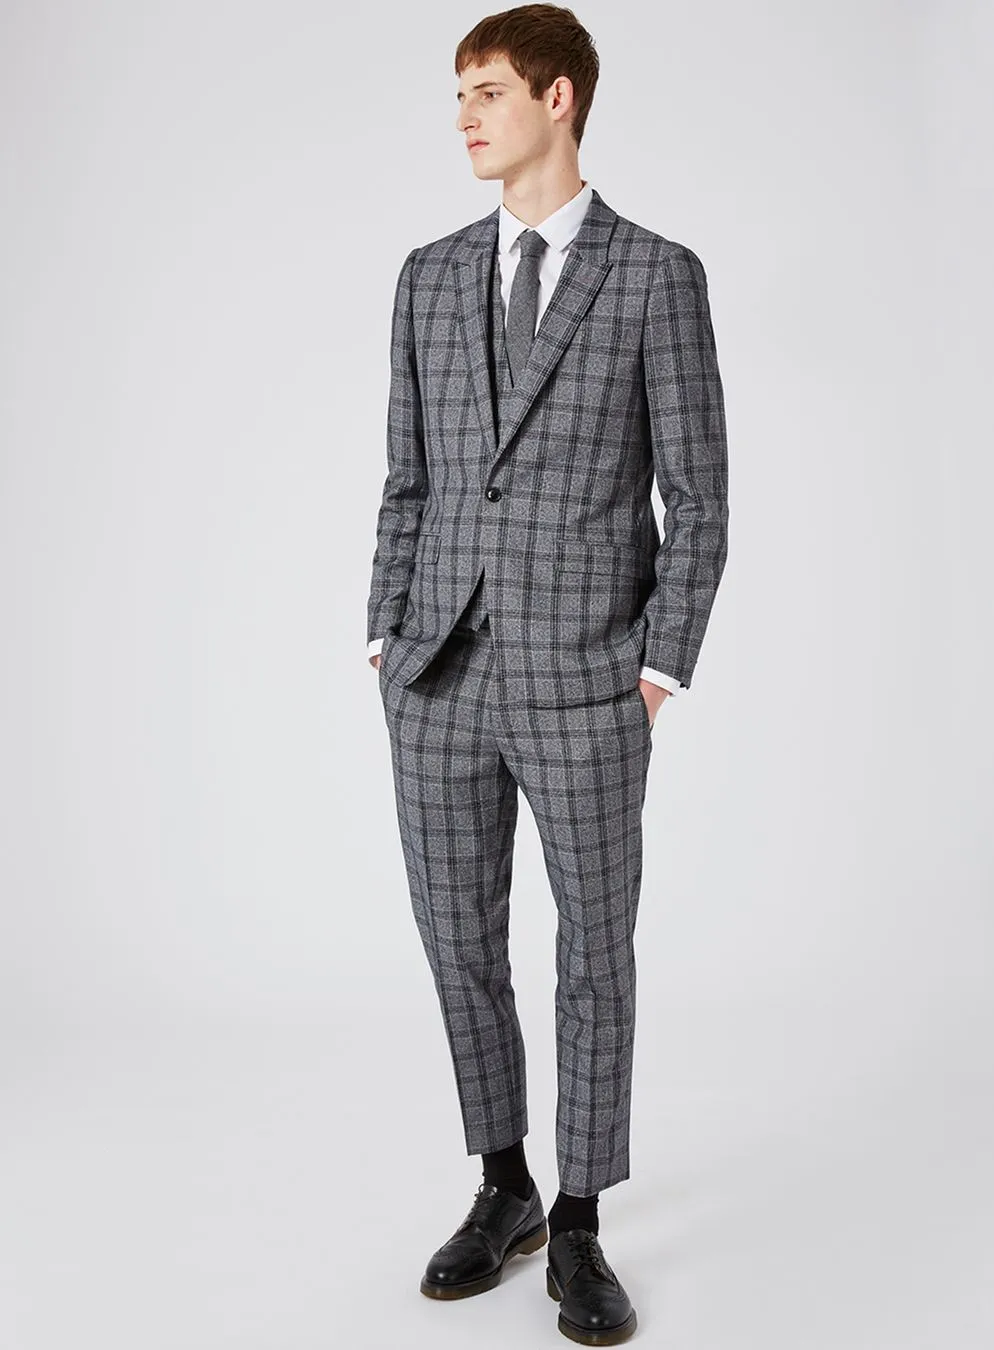 Dark Grey Men Suits For Weddings 2019 Fall New Arrival Three Pieces Tuxedo Glen Plaid Design Groom Casual Wear